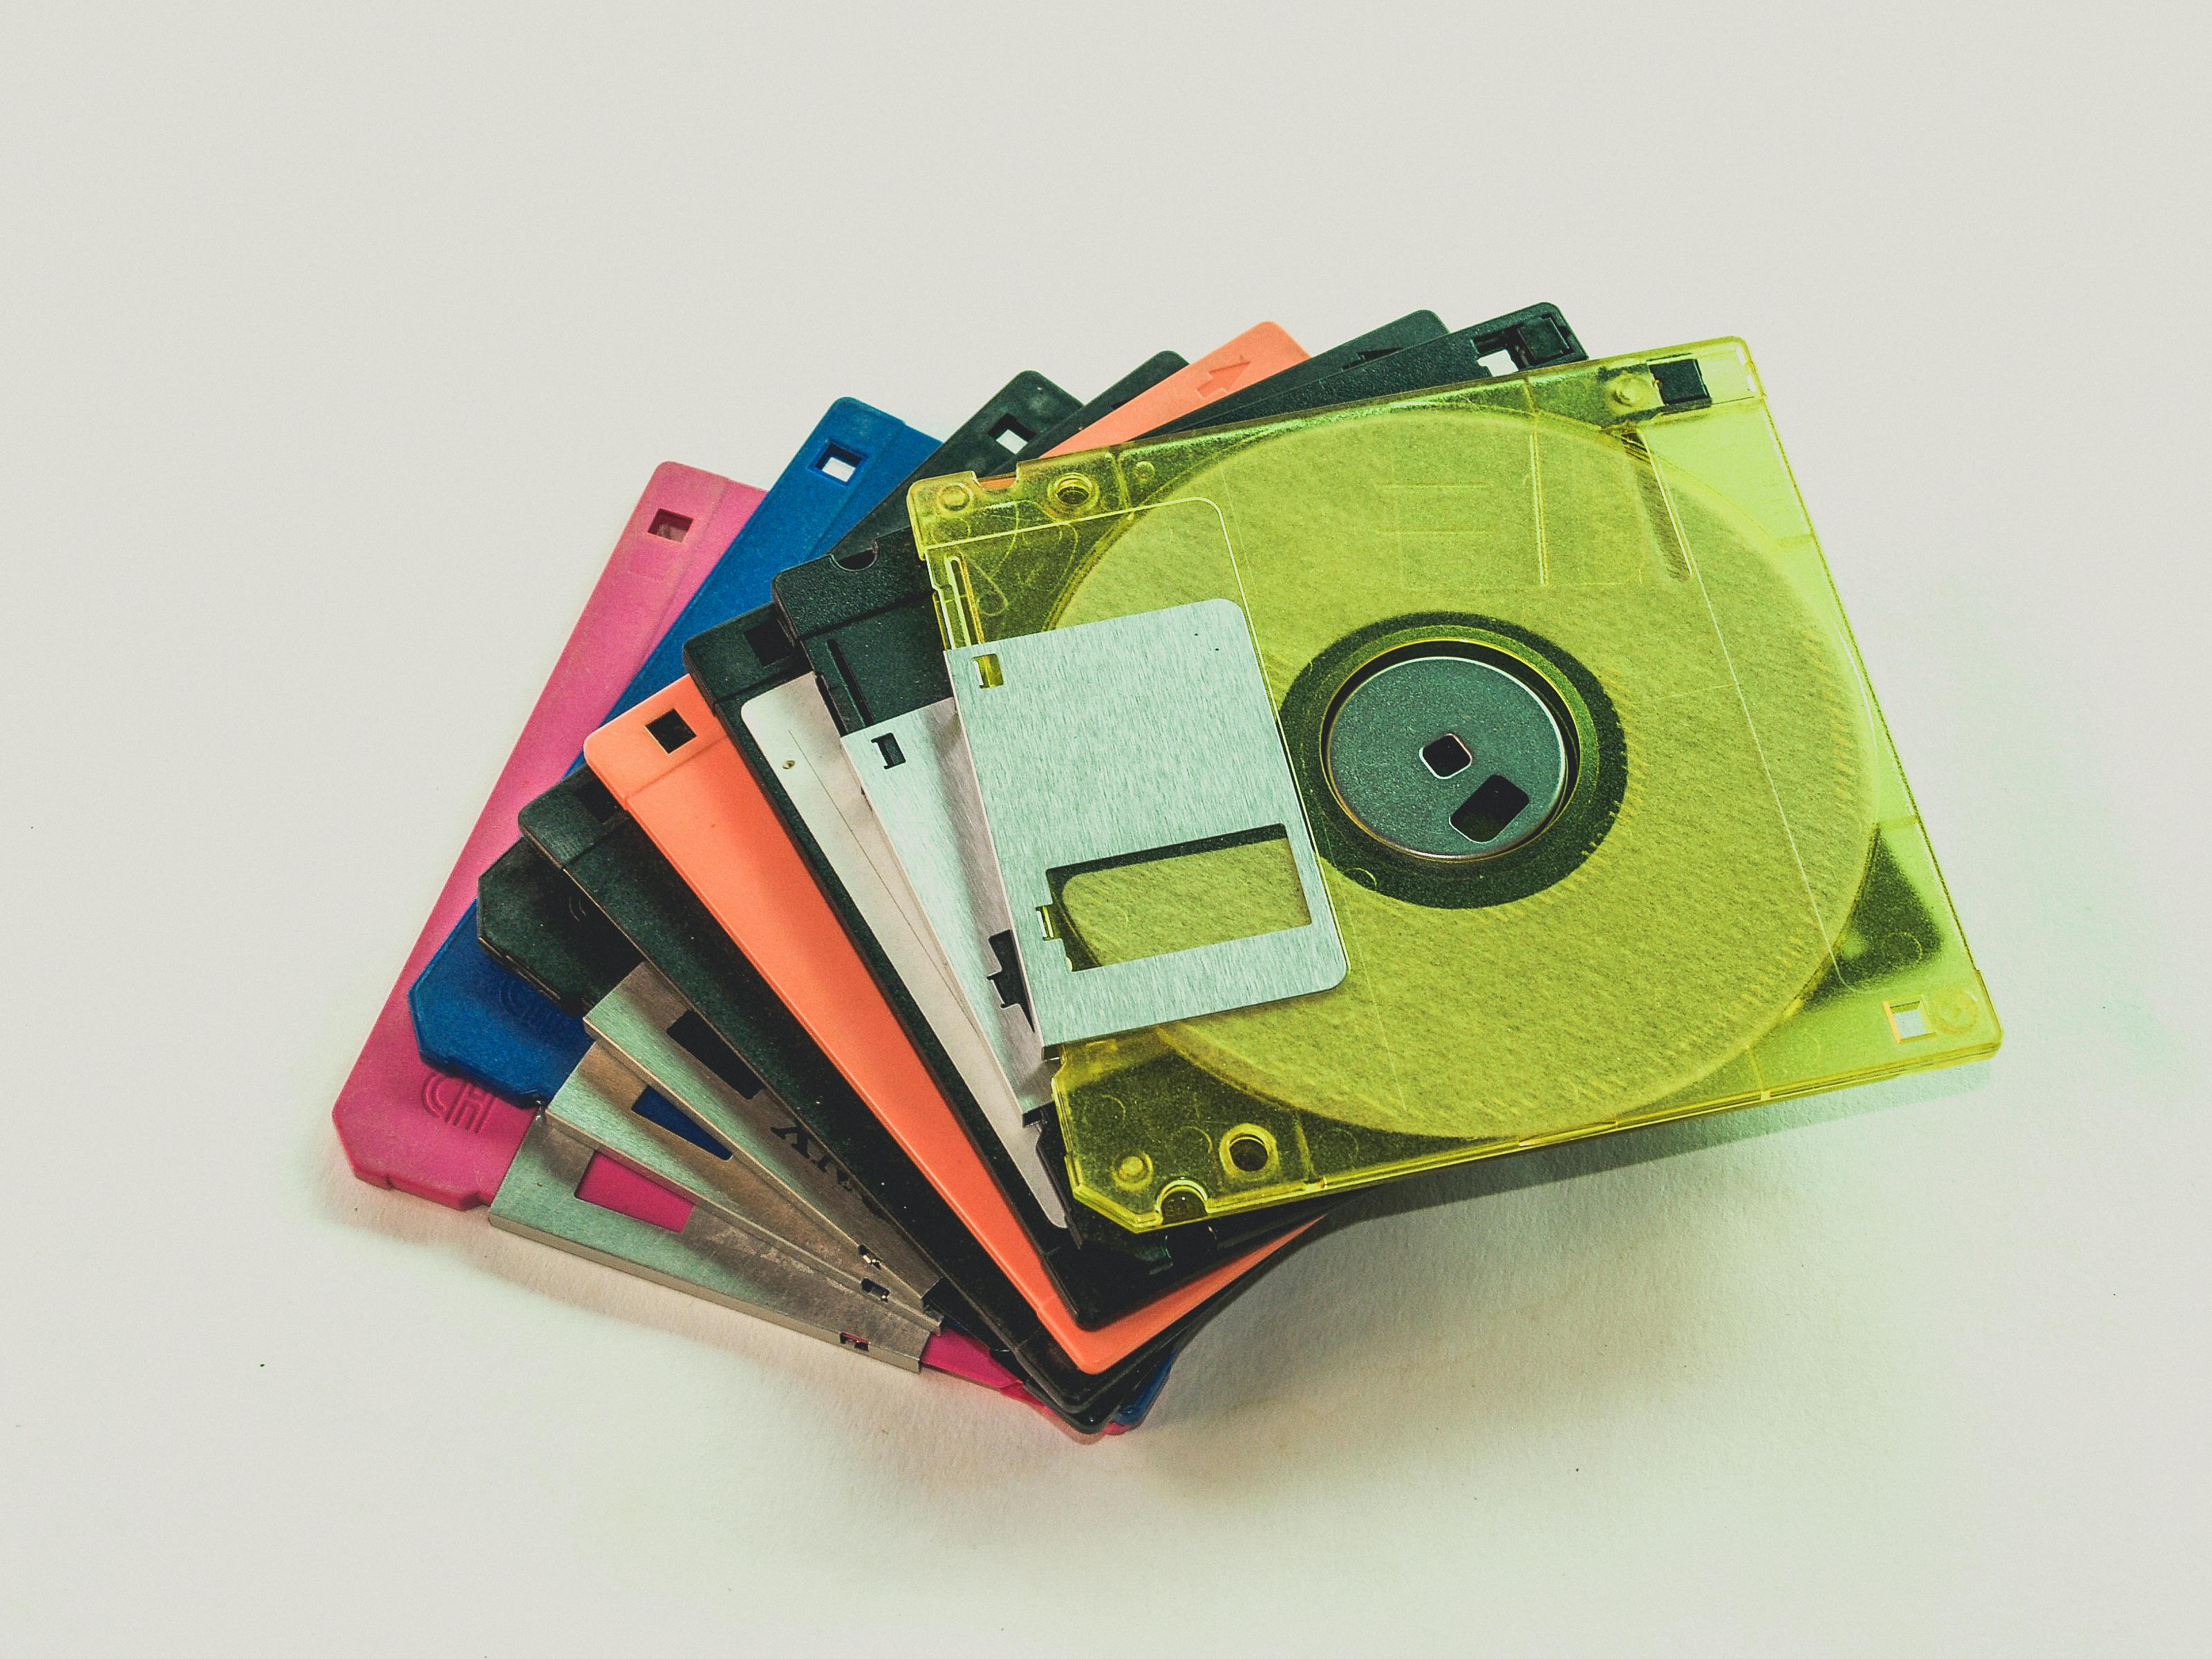 ms dos 6.22 floppy disk download